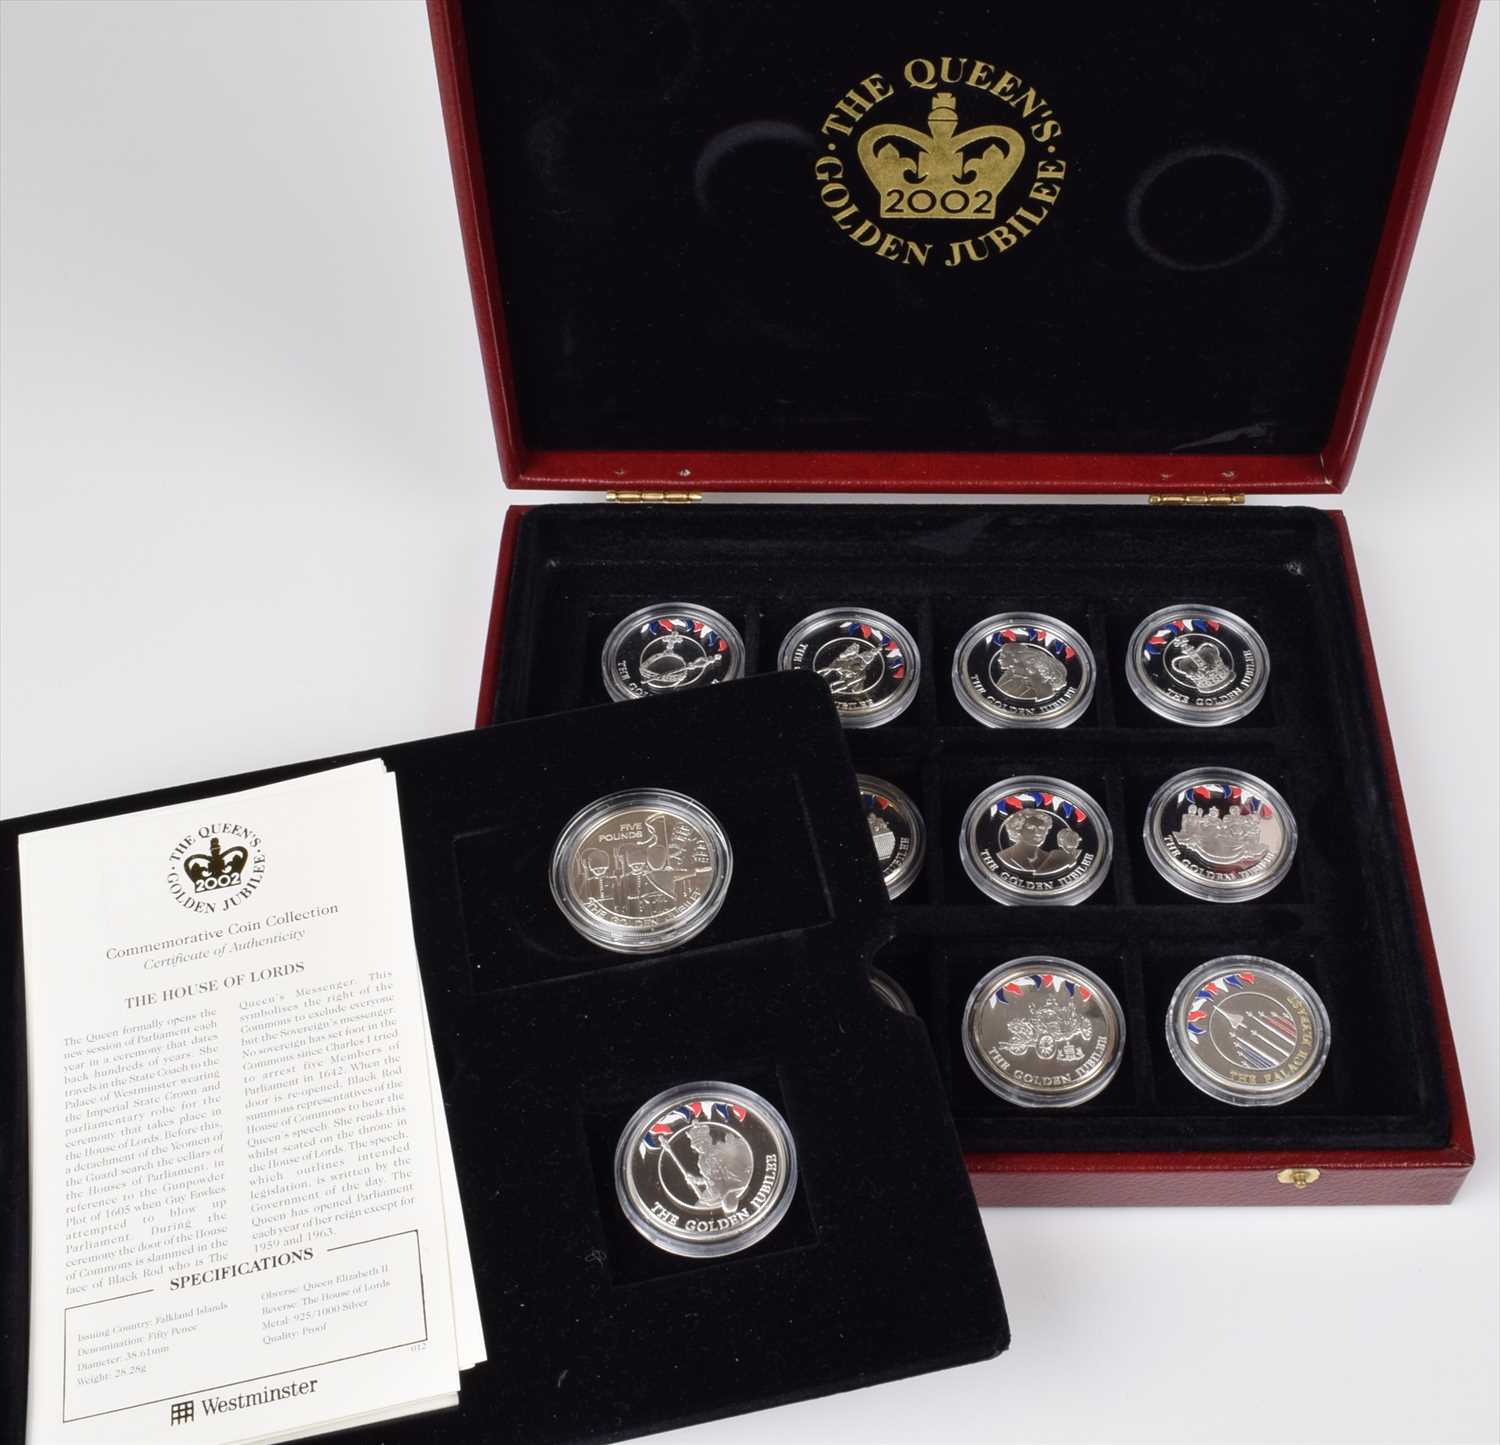 Lot 21 - Cased set of Queen's Golden Jubilee 2002 commemorative silver coins.